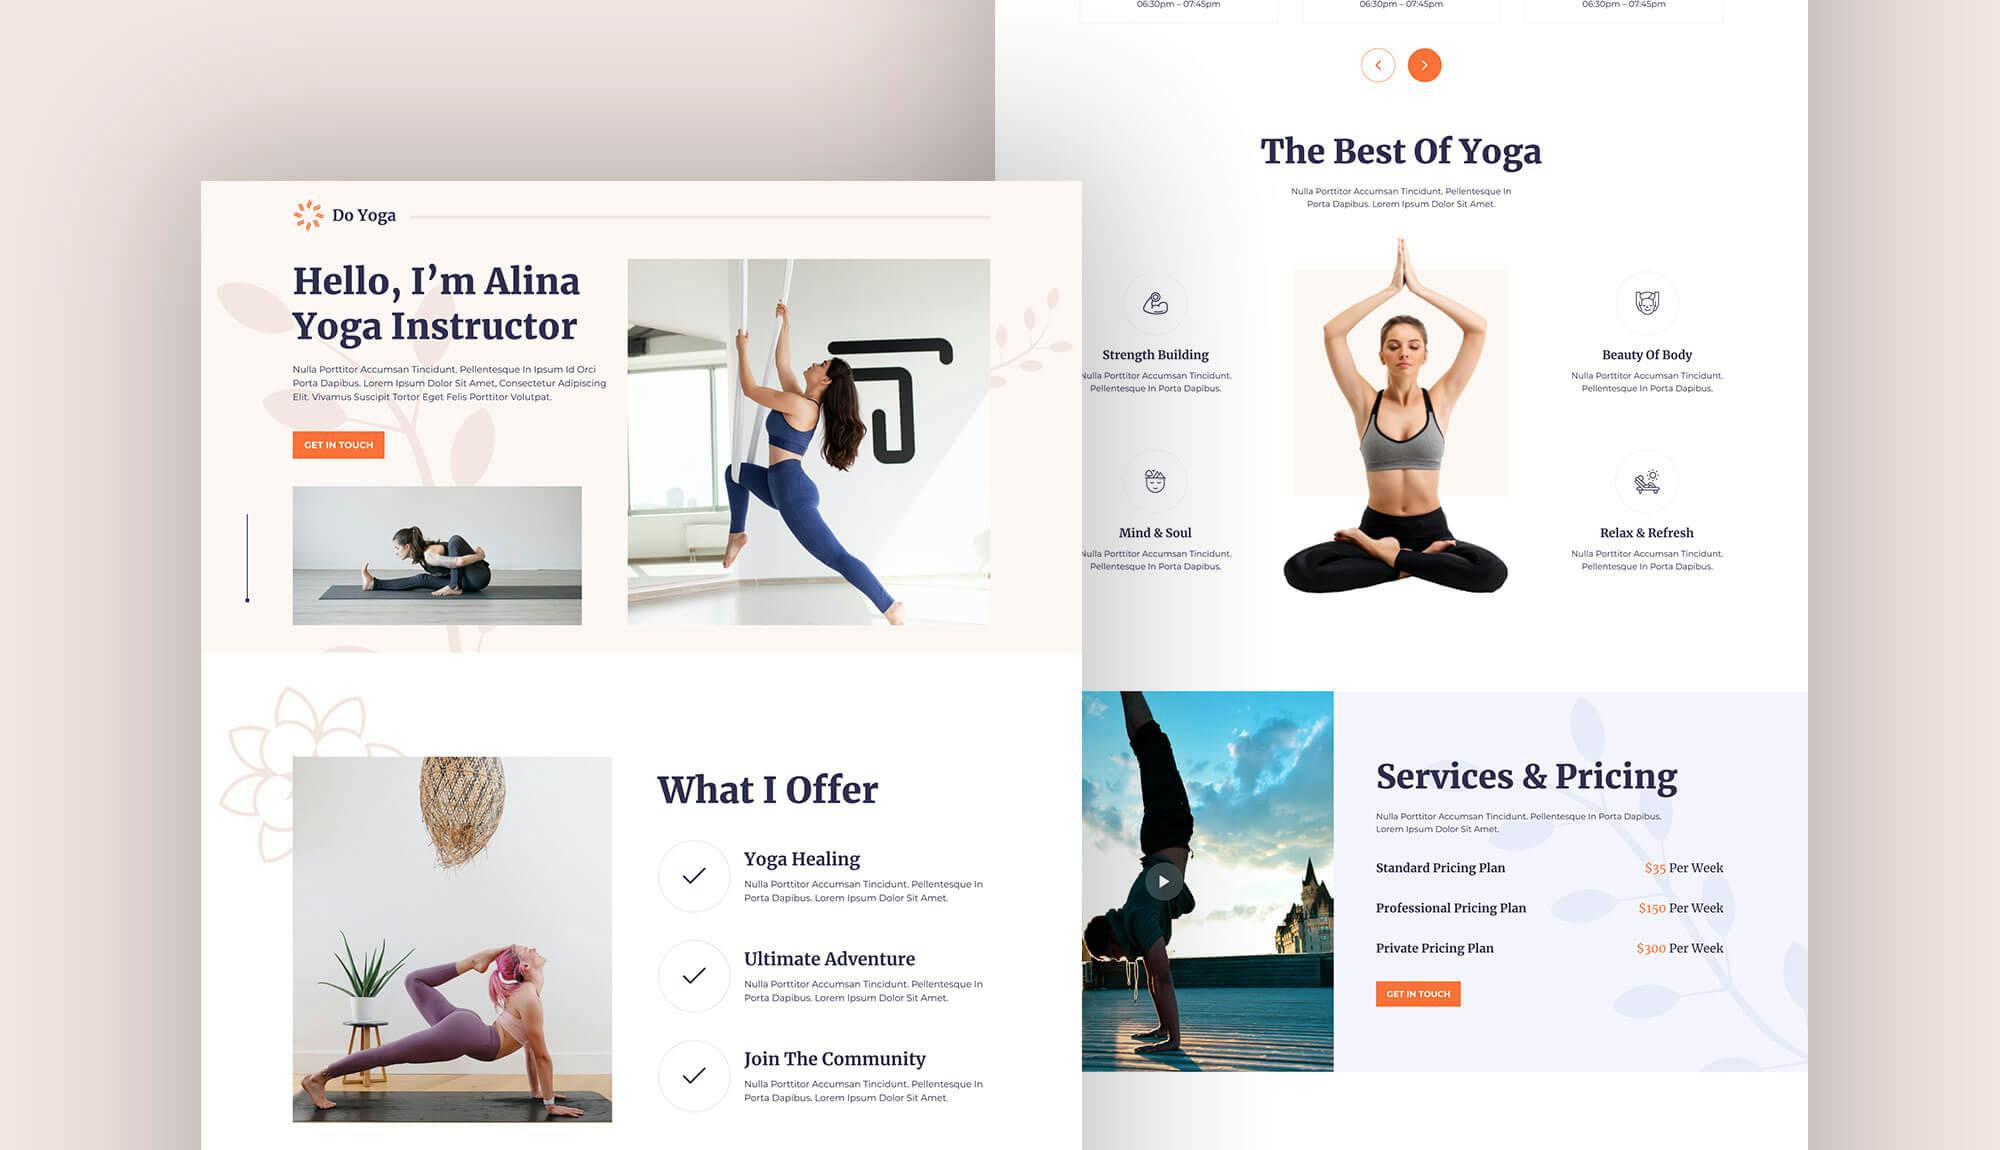 Do Yoga - Yoga Instructor Personal Website Template